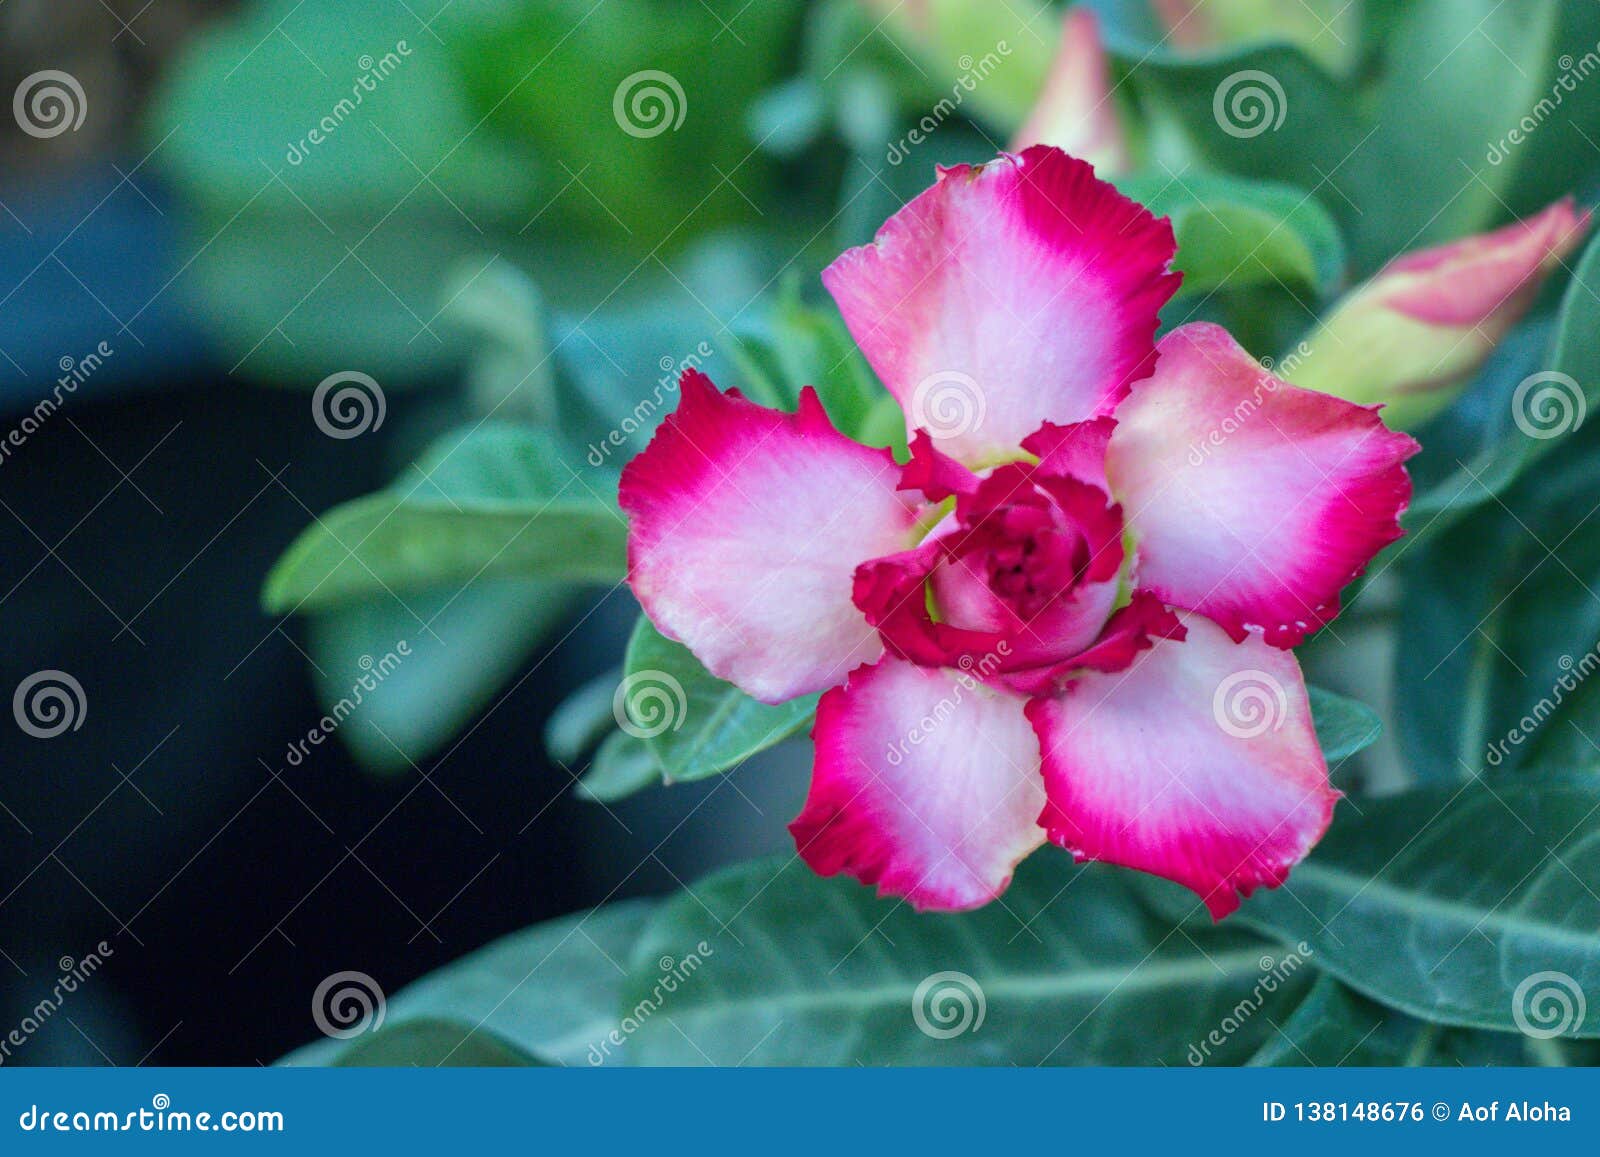 Close Up Adenium Arabicum Flower.Common Names Include Impala Lily And ...